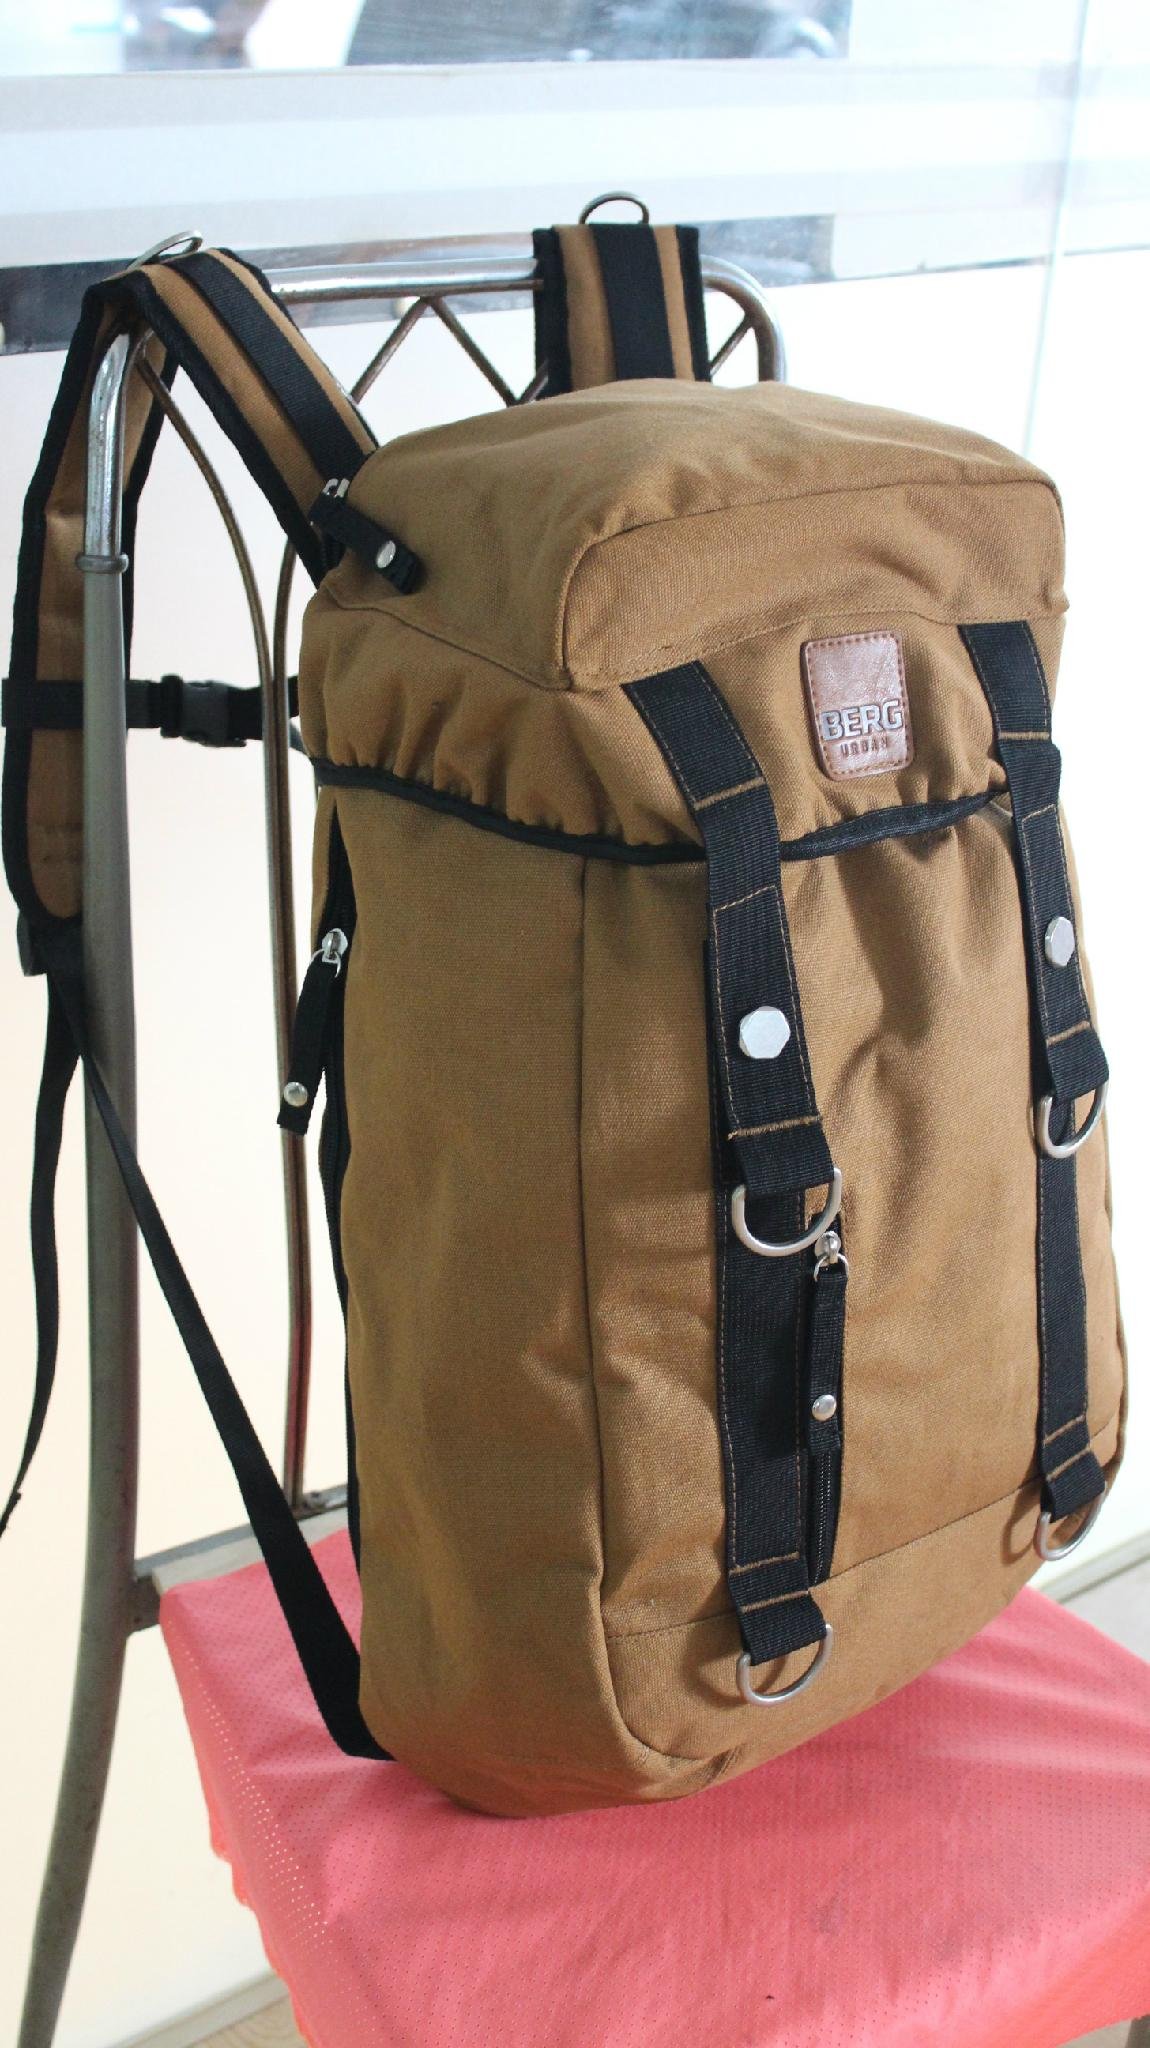 backpack camping bag travel bag travel bag2016FASHION 2